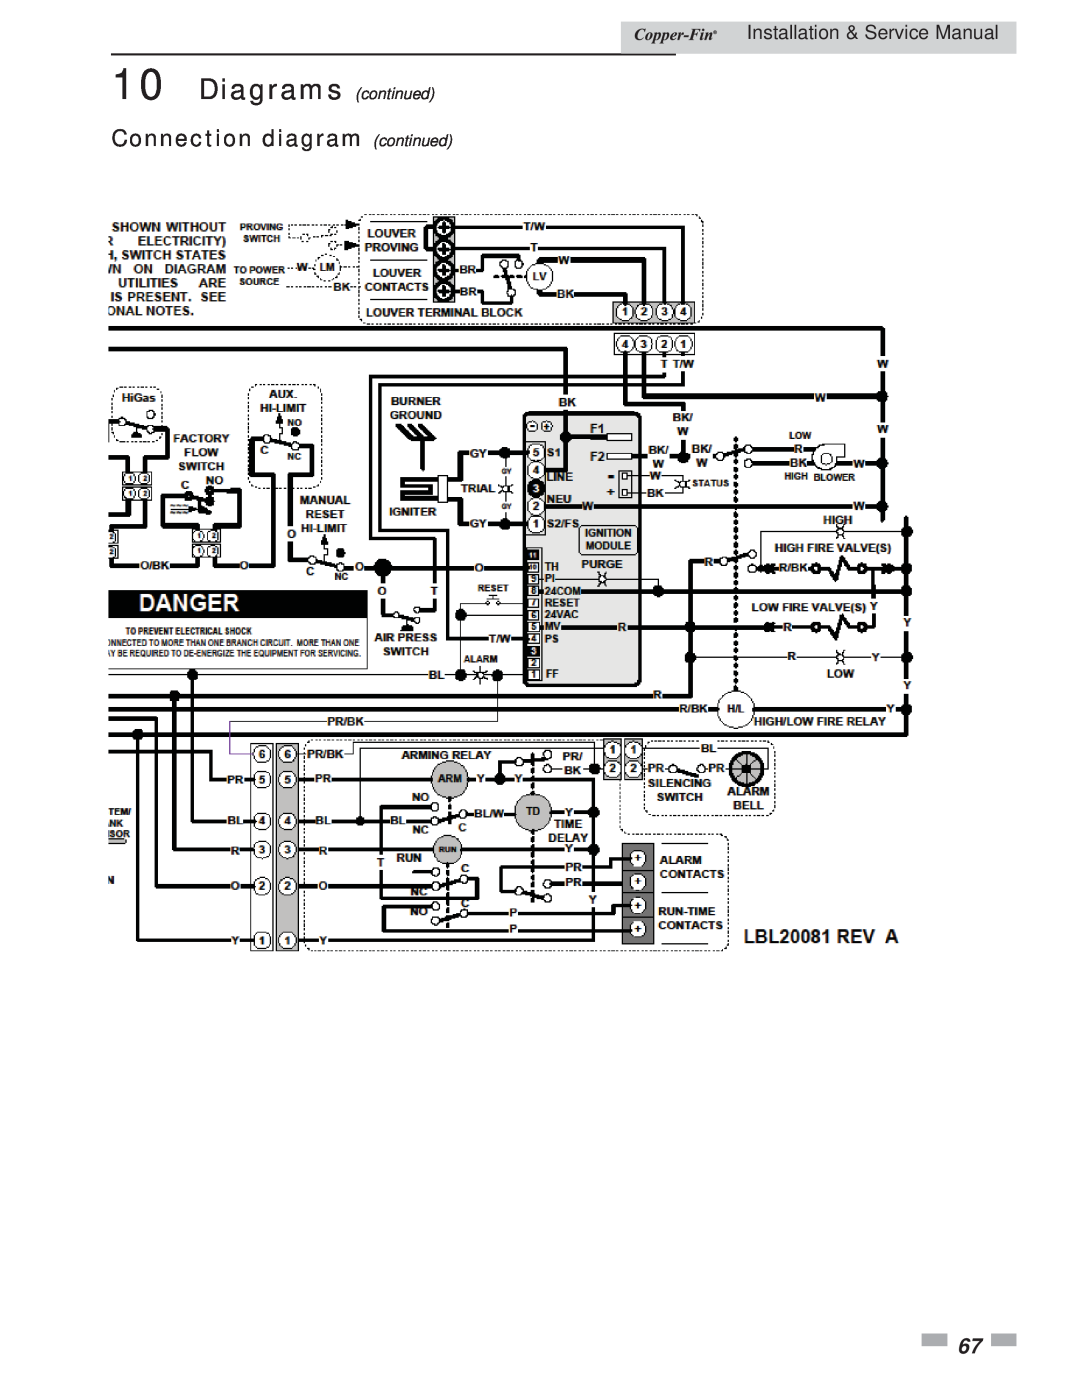 Lochinvar 497 - 2067 service manual Connection diagram continued, Installation & Service Manual, Diagrams continued 